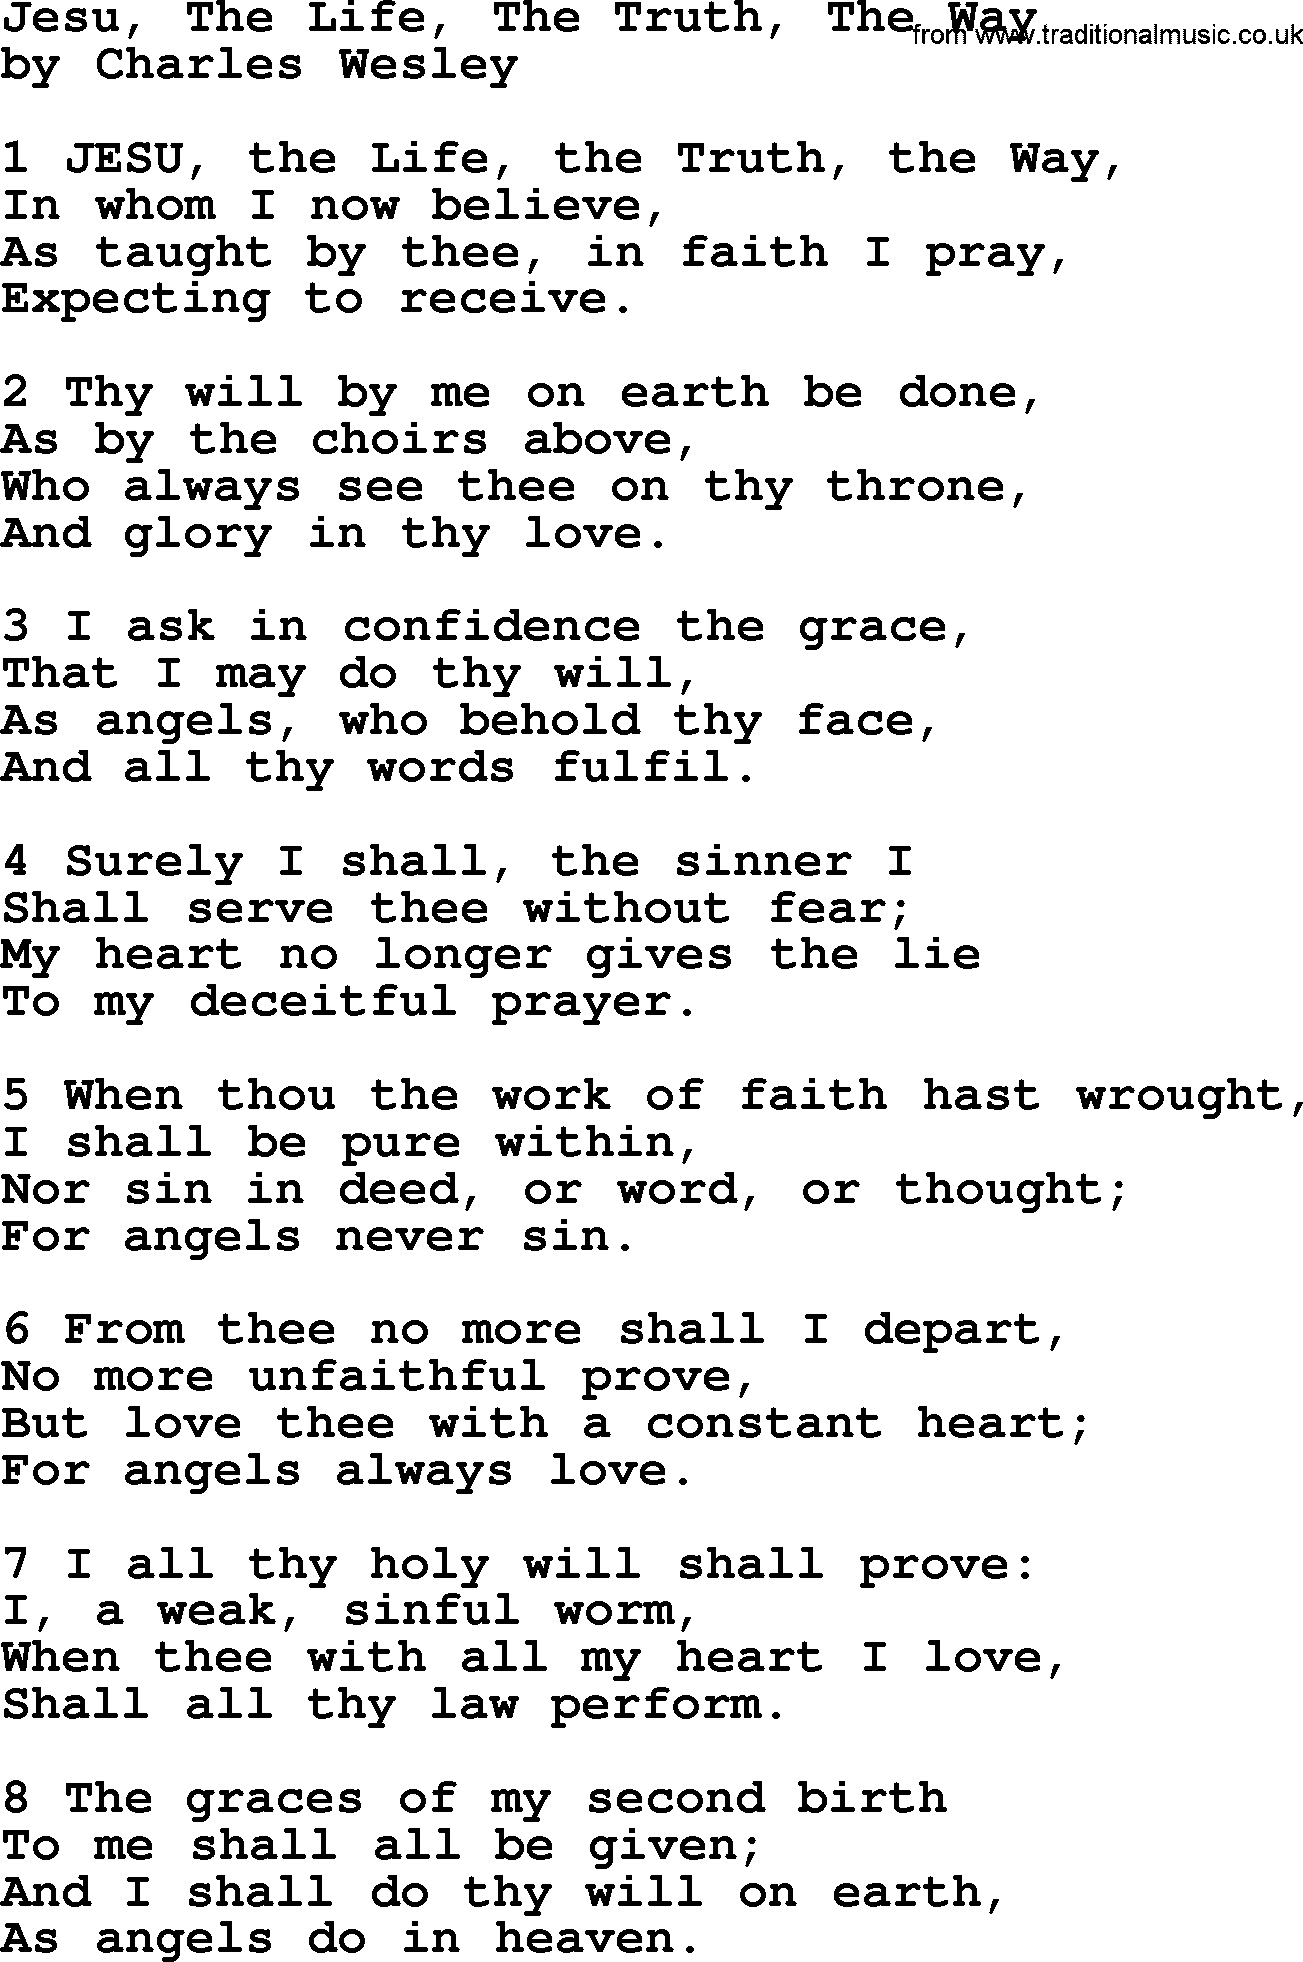 Charles Wesley hymn: Jesu, The Life, The Truth, The Way, lyrics